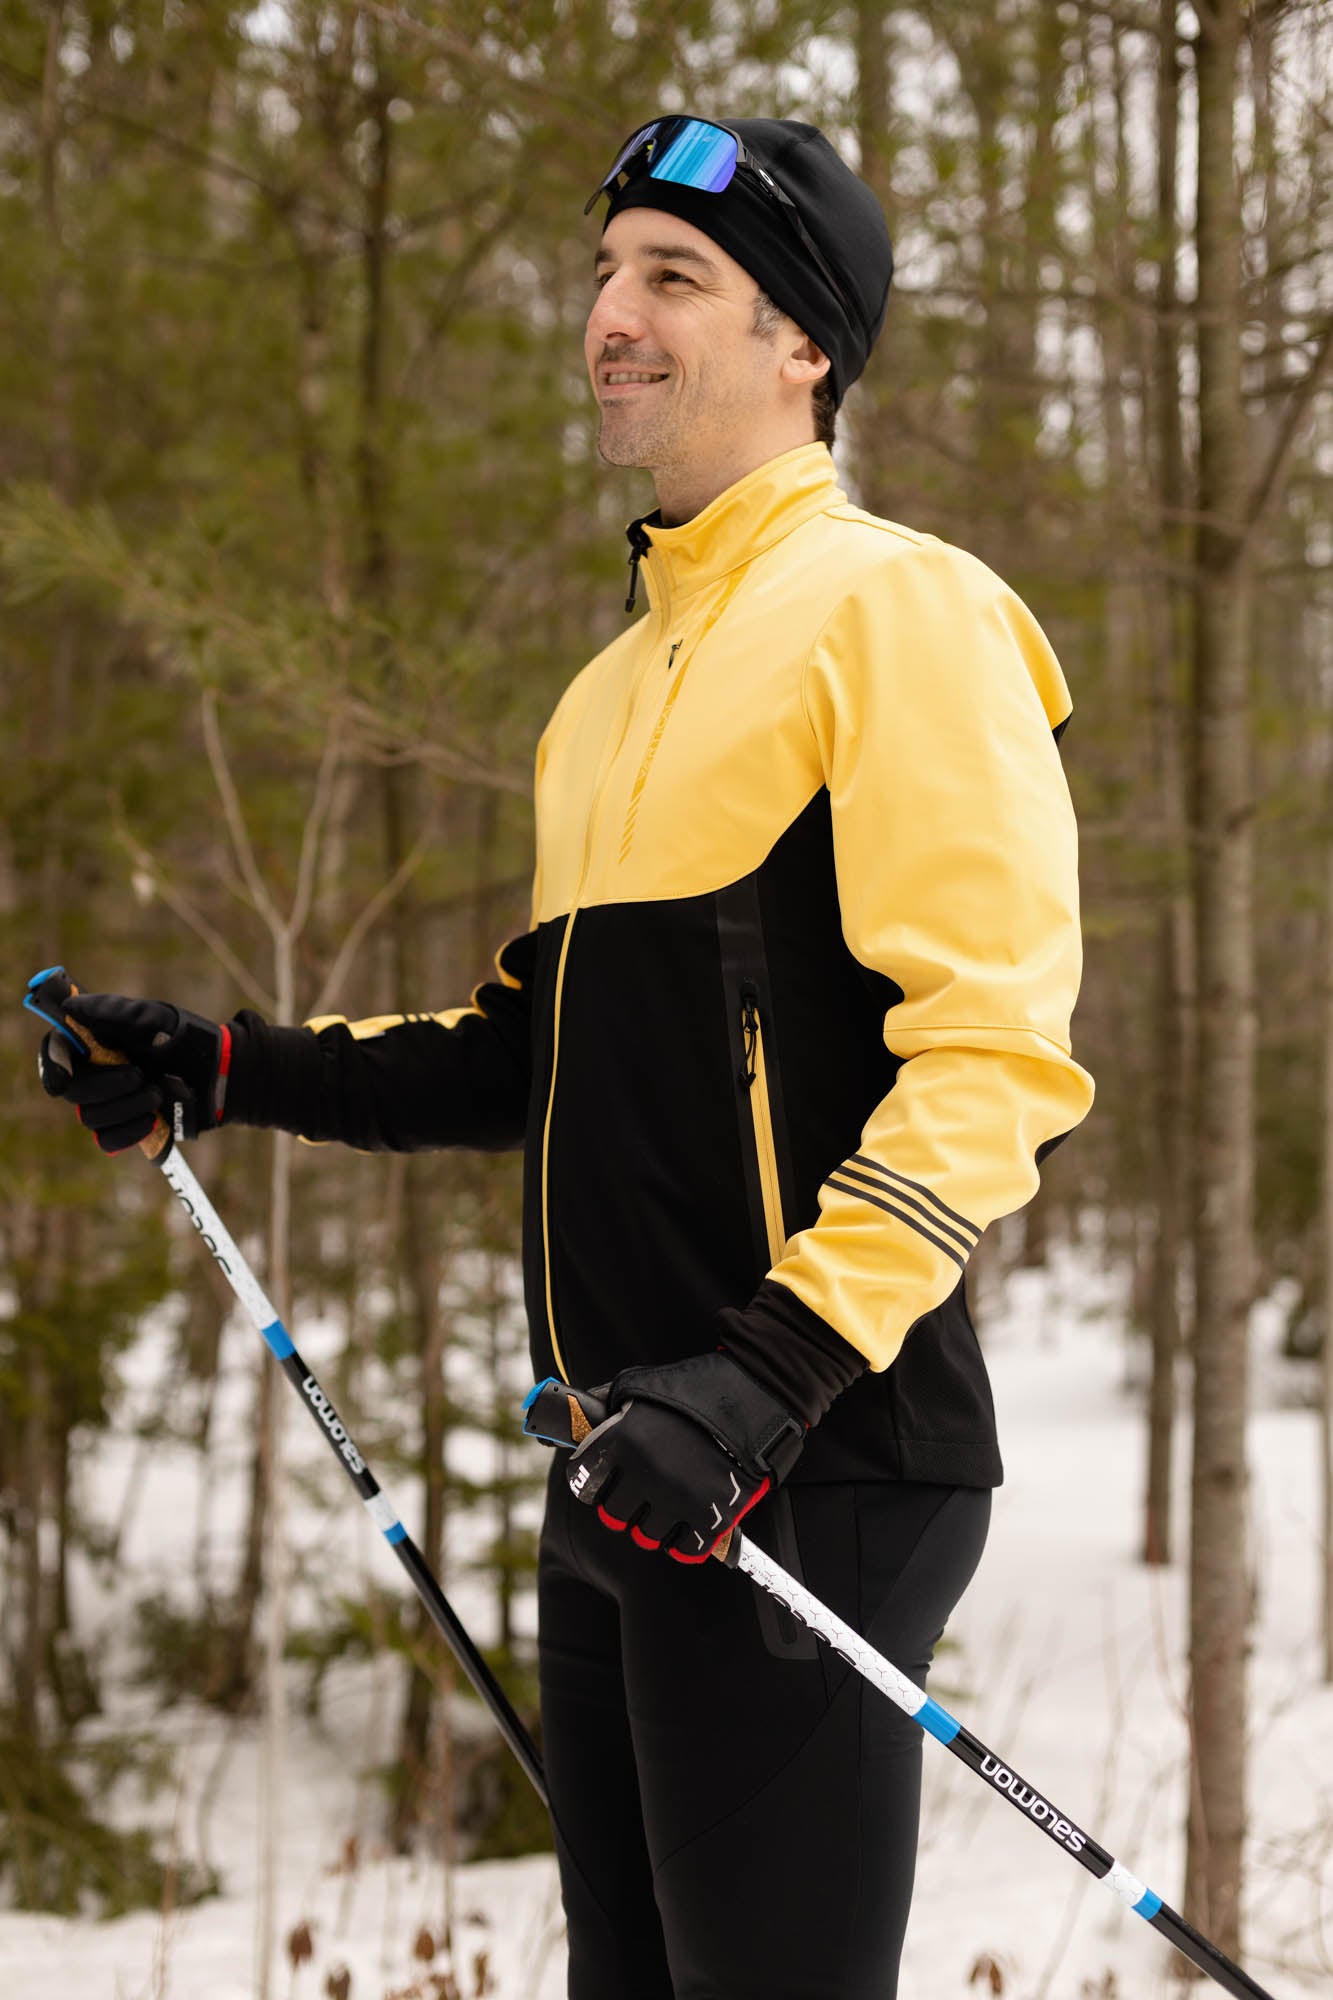 Manteau de ski de fond Davos - Homme - 40% de rabais !